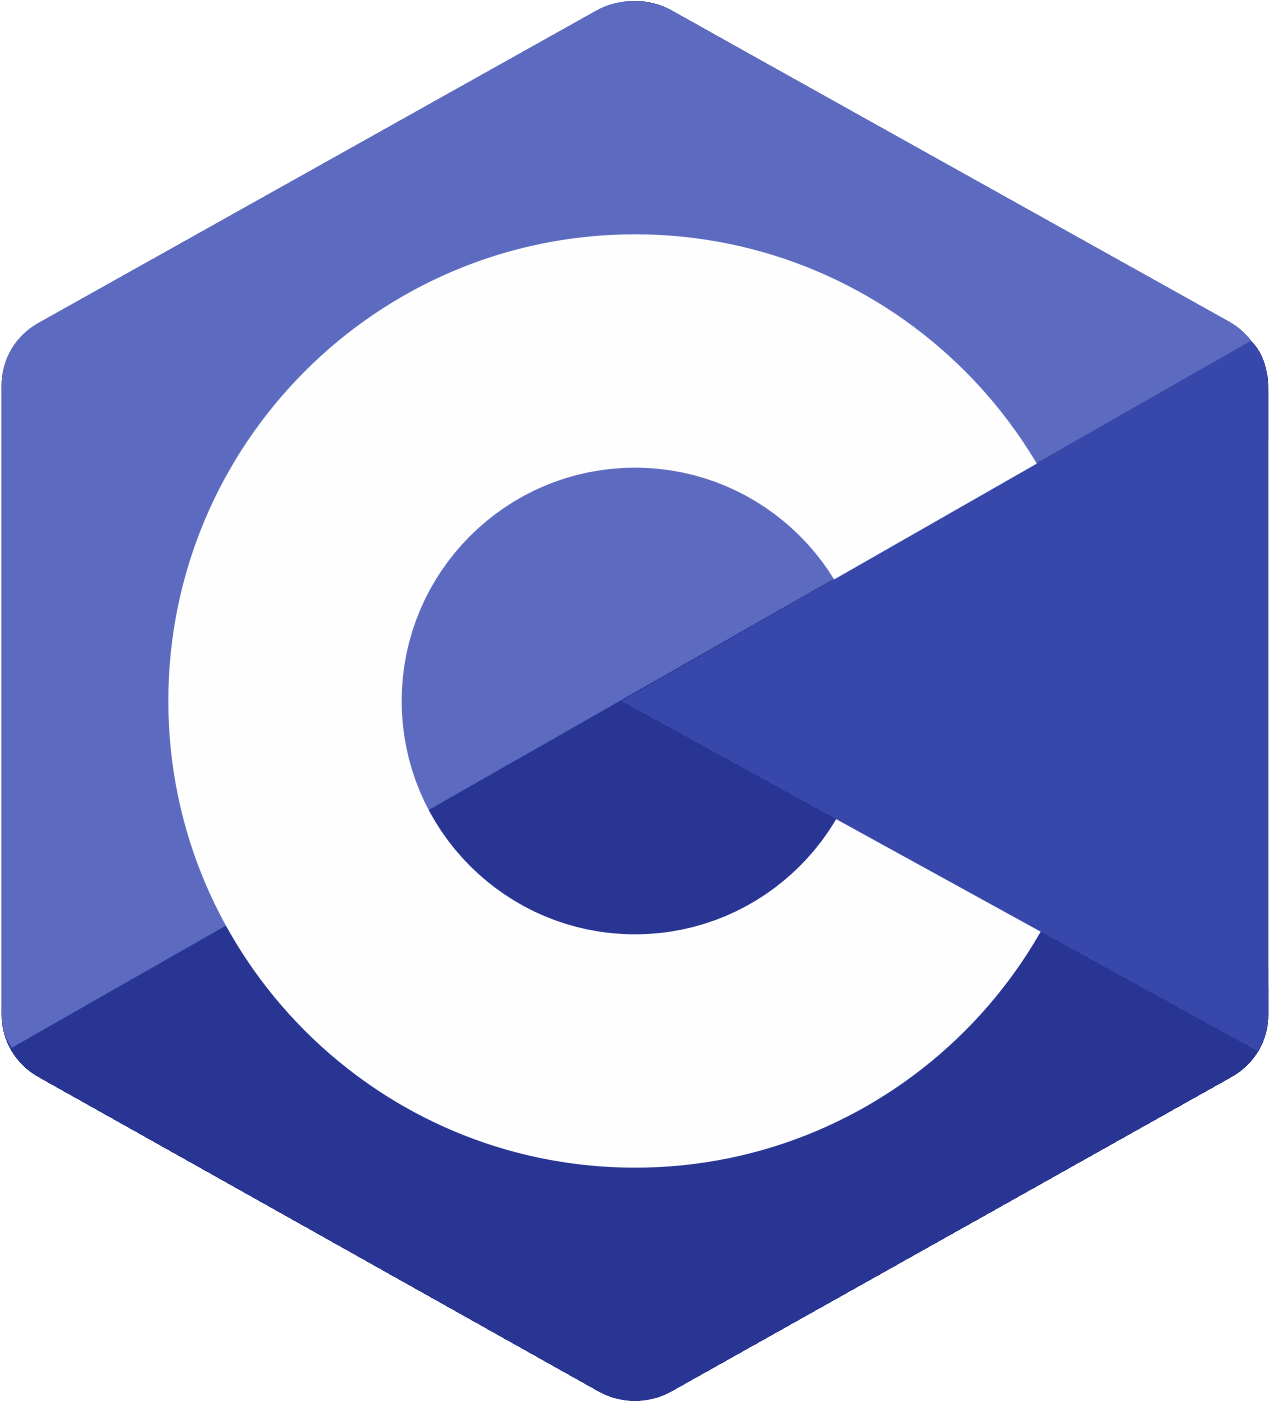 The C Logo